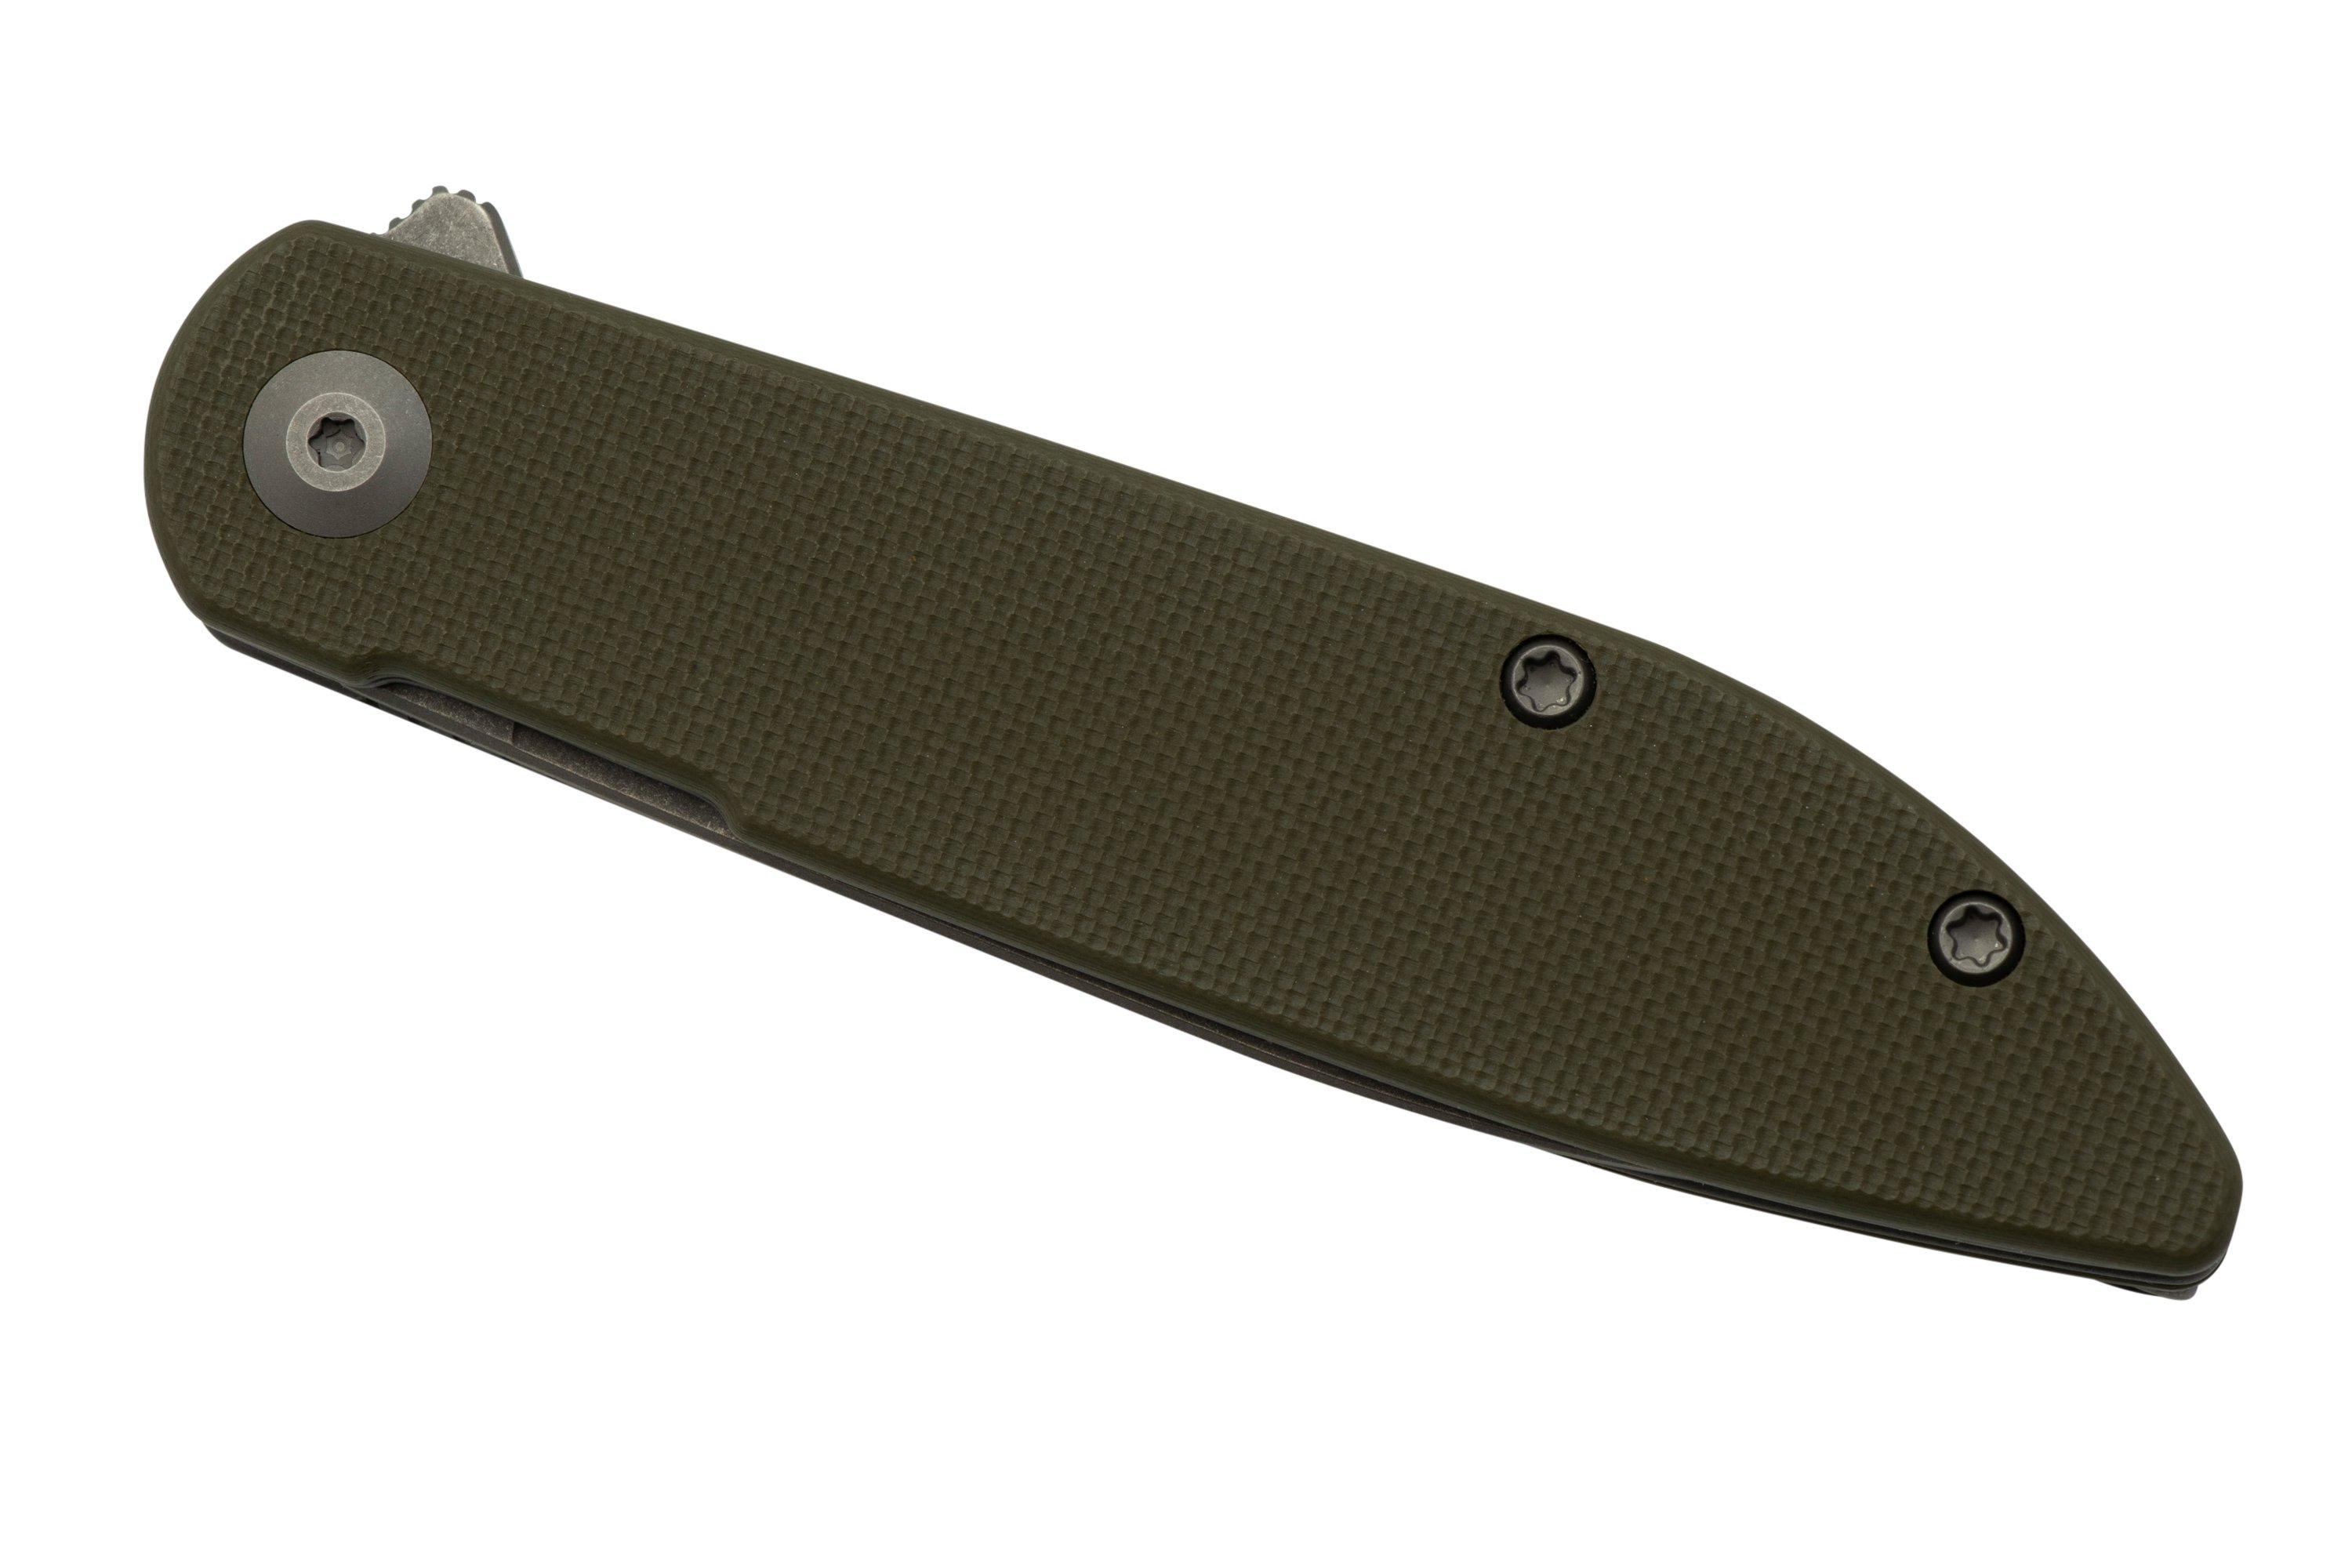  SENCUT Bocll II Pocket Knife Folding Knife for EDC